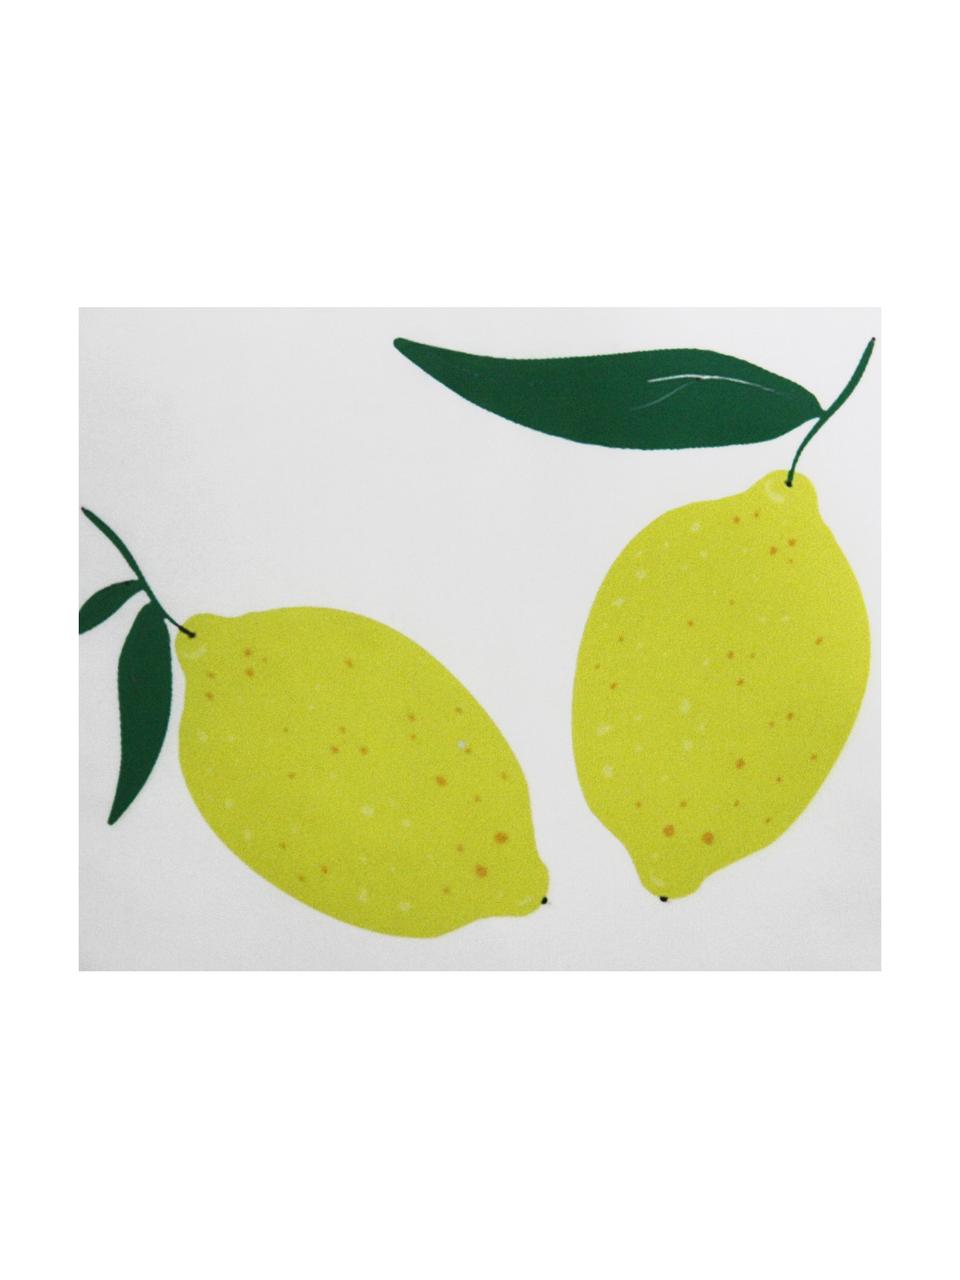 Kissenhülle Lemon mit Zitronen, 100% Polyester, Weiss, Gelb, Grün, 45 x 45 cm